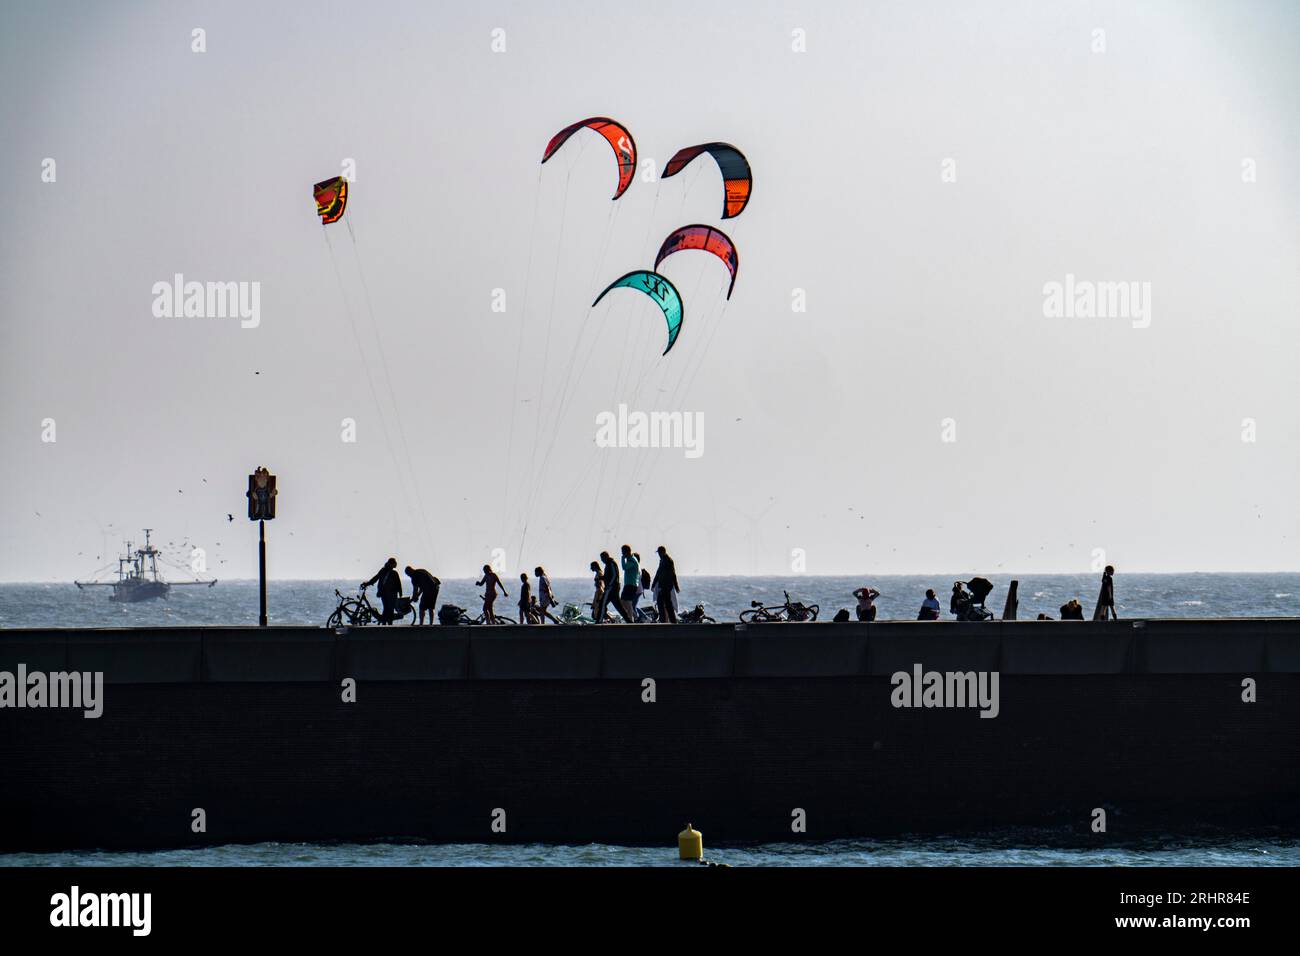 Kitesurfers off the coast of Scheveningen, strollers on the pier, The Hague, Netherlands Stock Photo